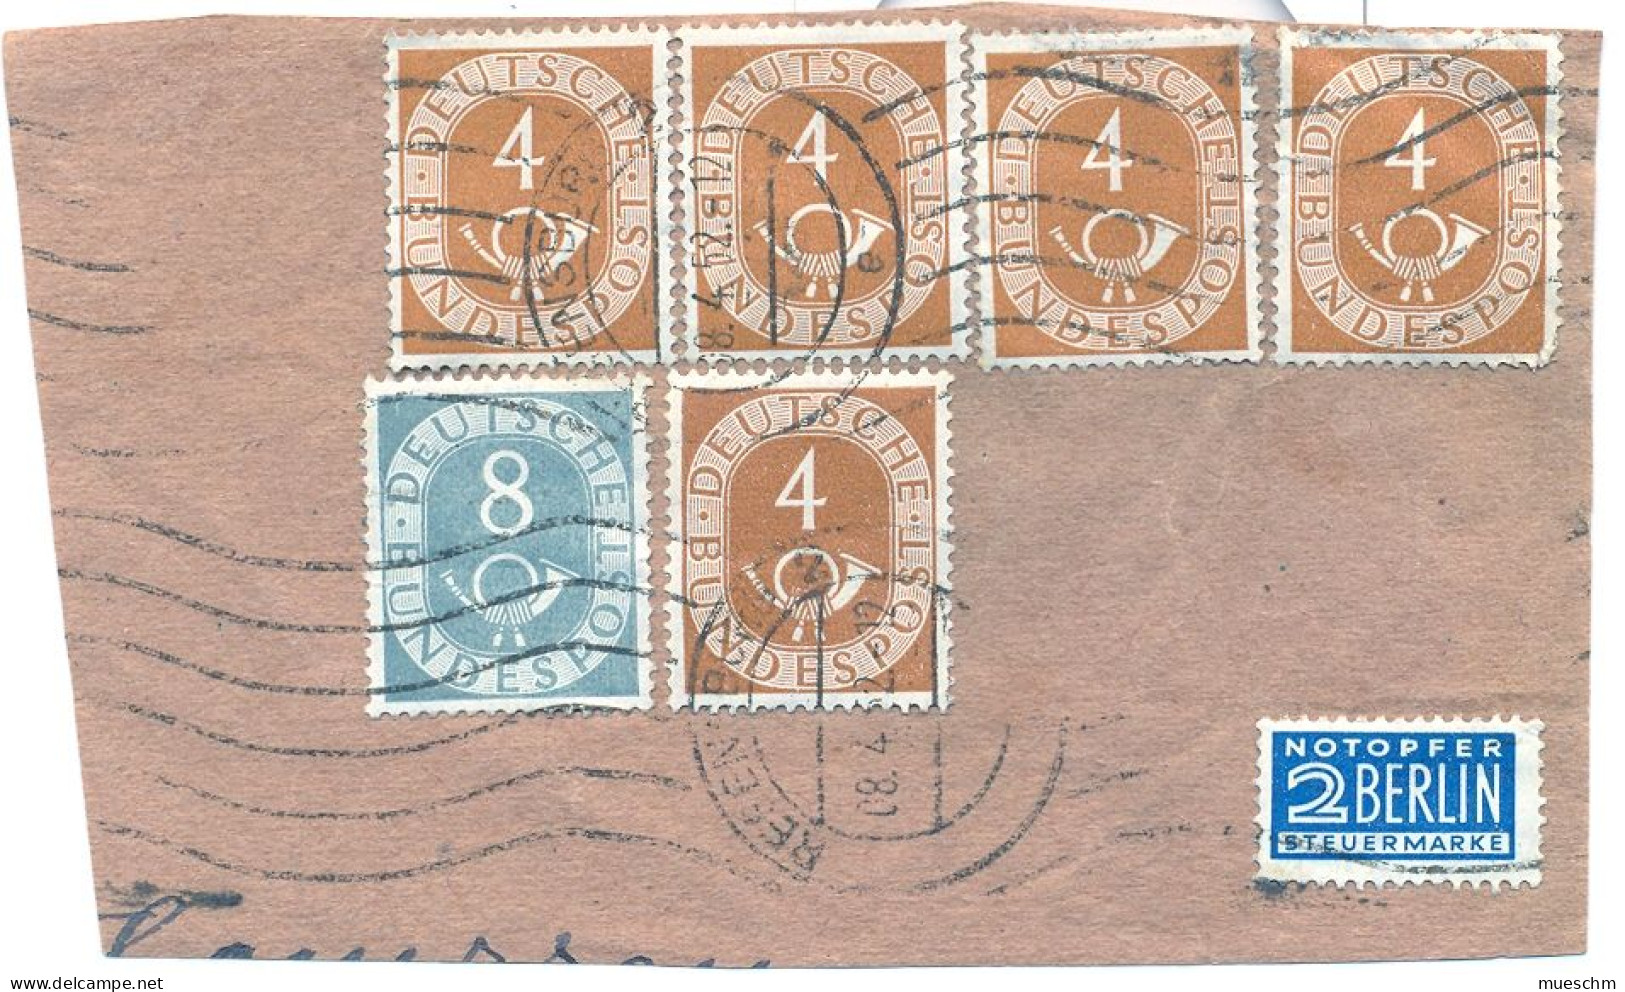 Bundesrepublik, 1952, Briefstück Mit 5xMi.124 (Posthorn 4Pfg.)+1xMi.Nr.127 (8Pfg.)+Notopfer Berlin (8473E) - Usati